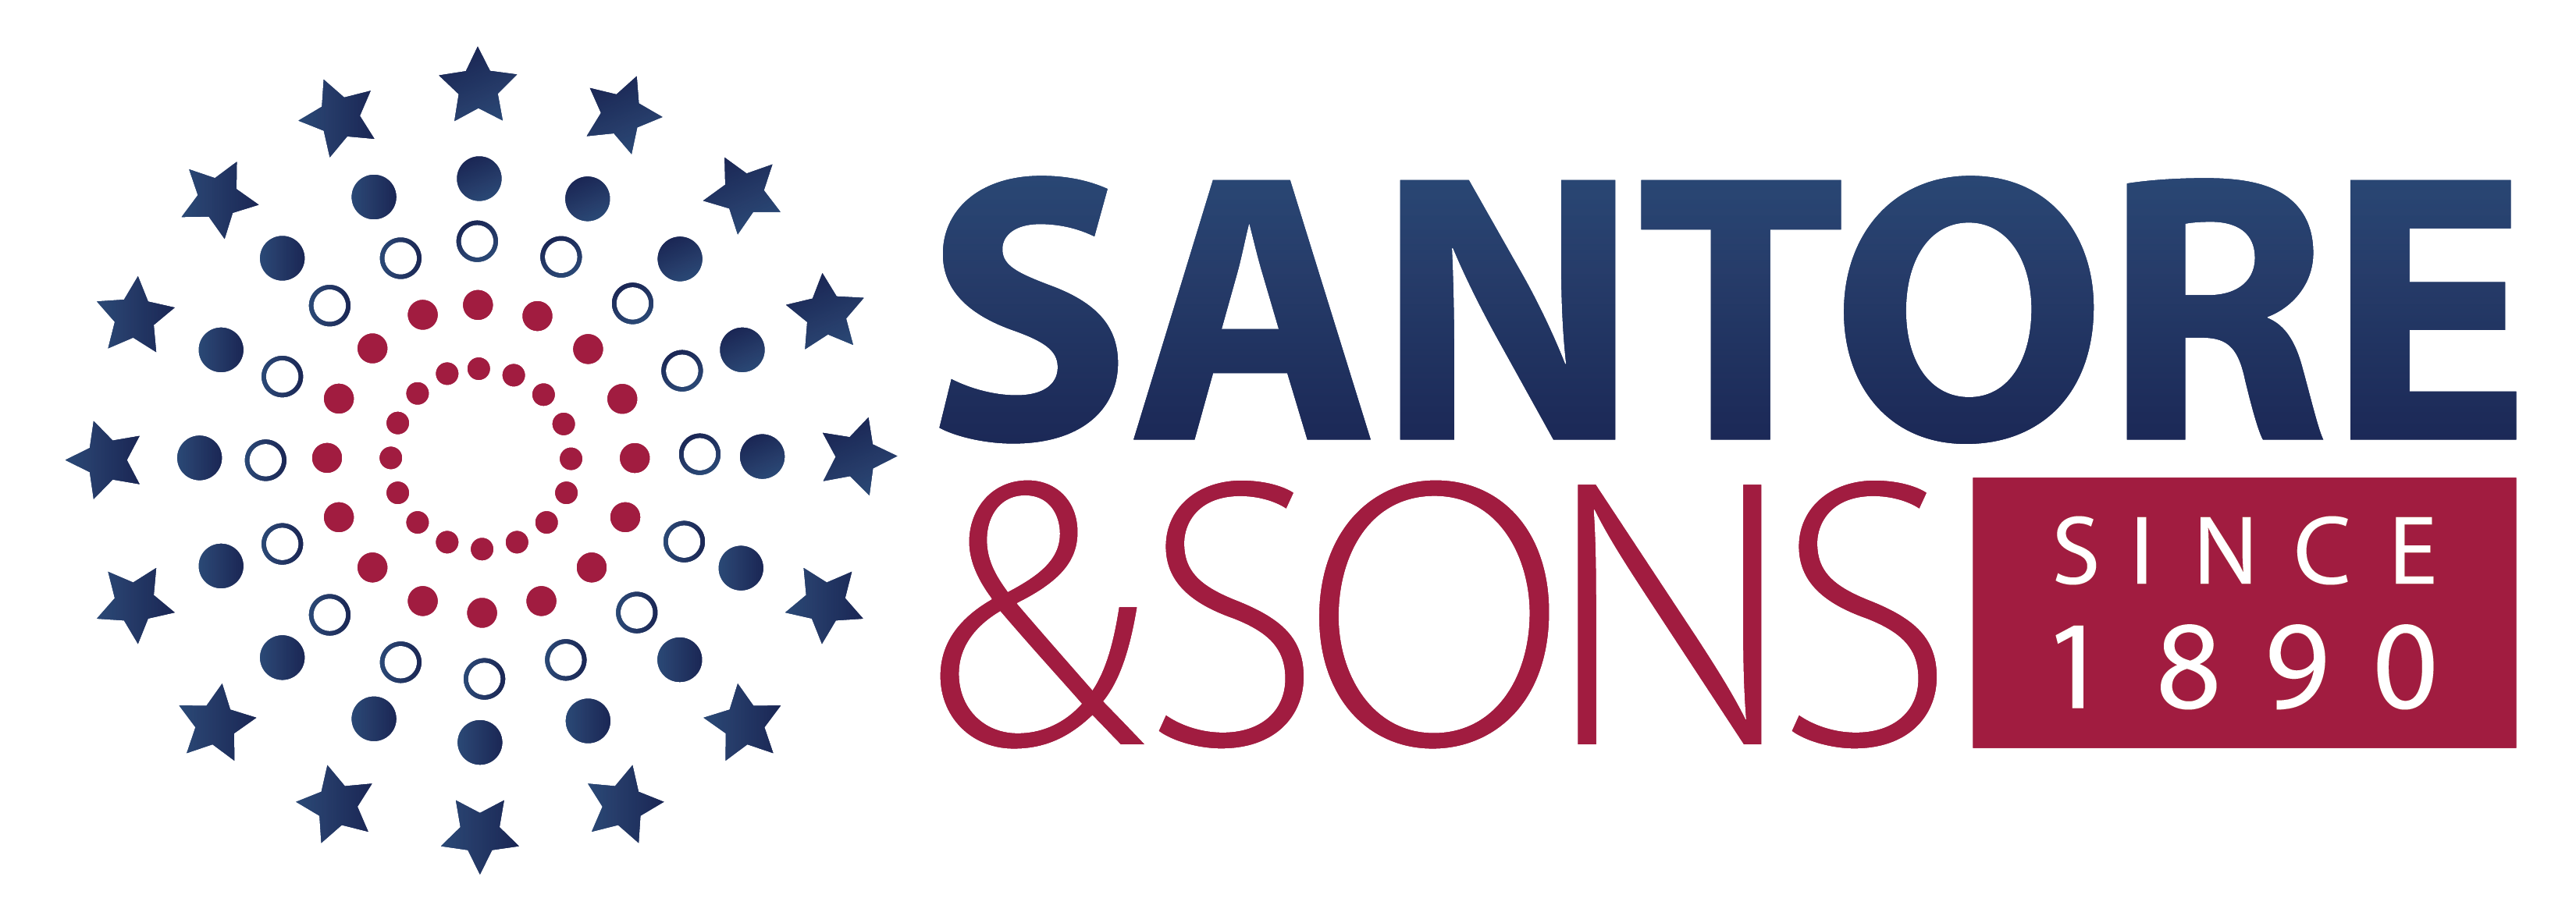 Santore & Sons